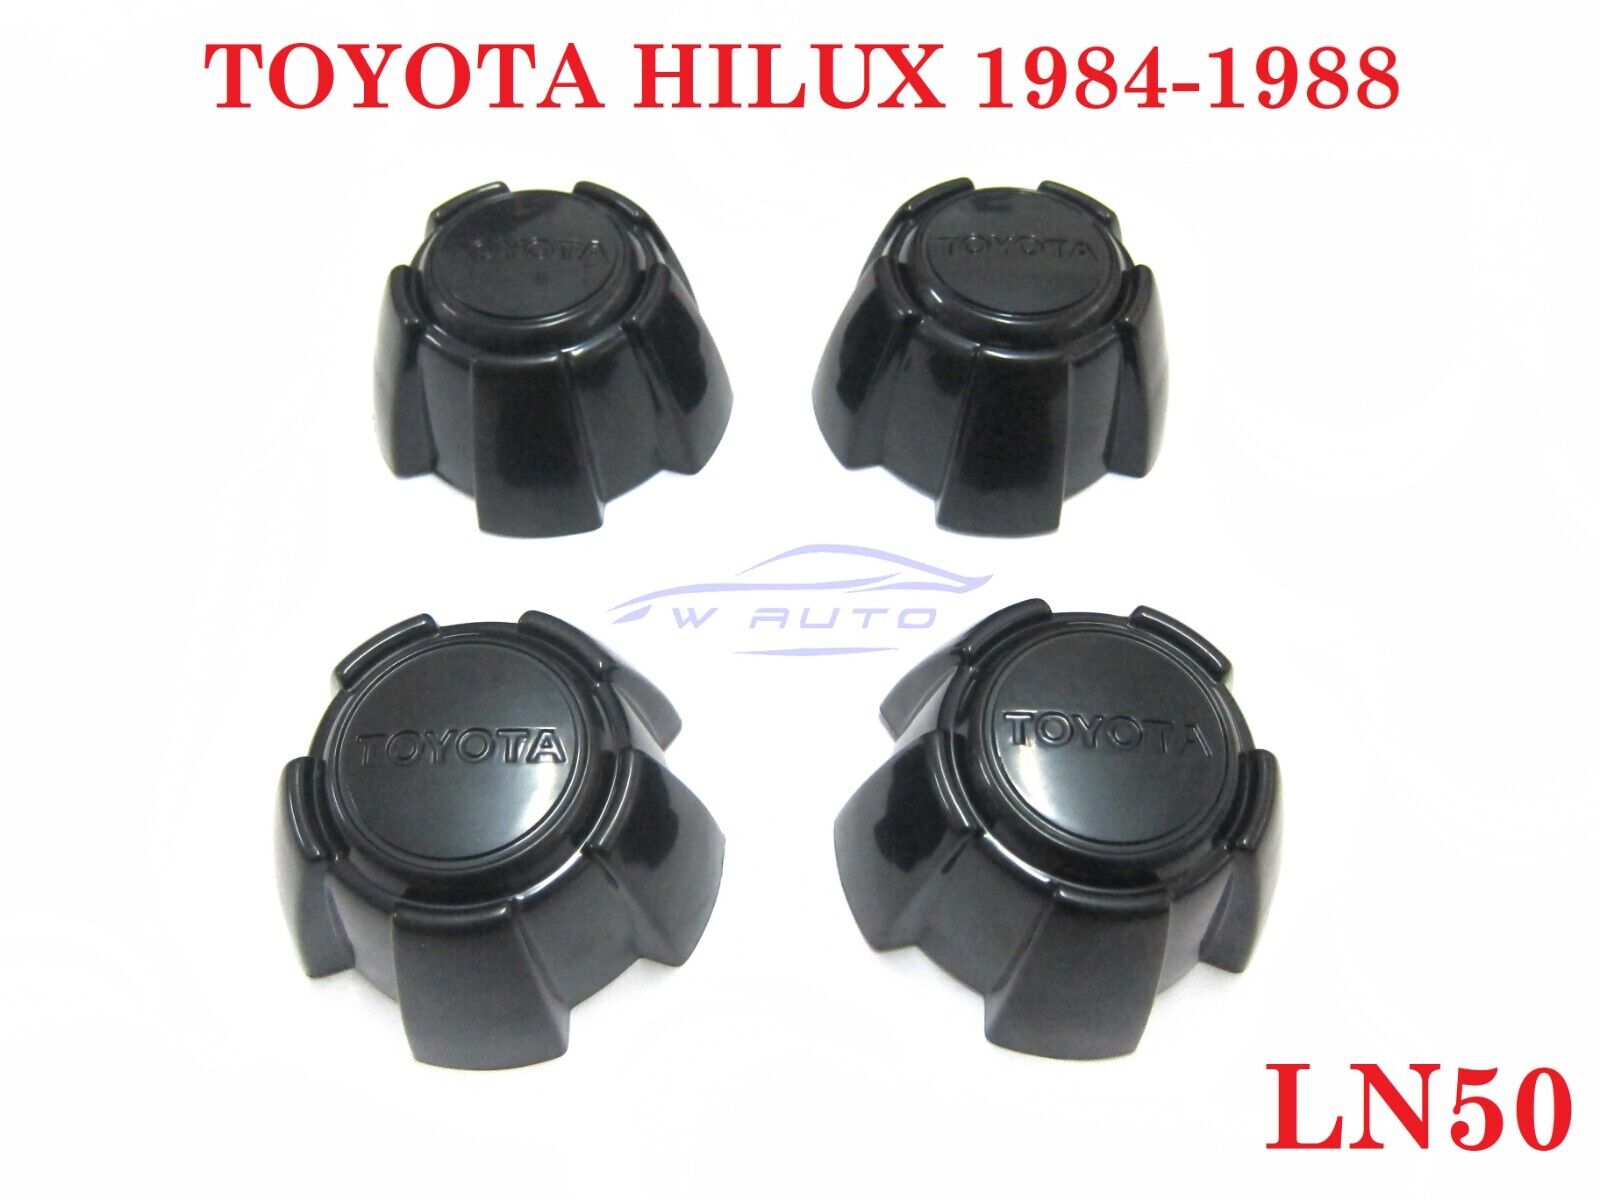 BLACK CENTER WHEEL CAP NO CLIP LOCK FOR TOYOTA HILUX LN50 PICKUP MK2 1984 - 1988